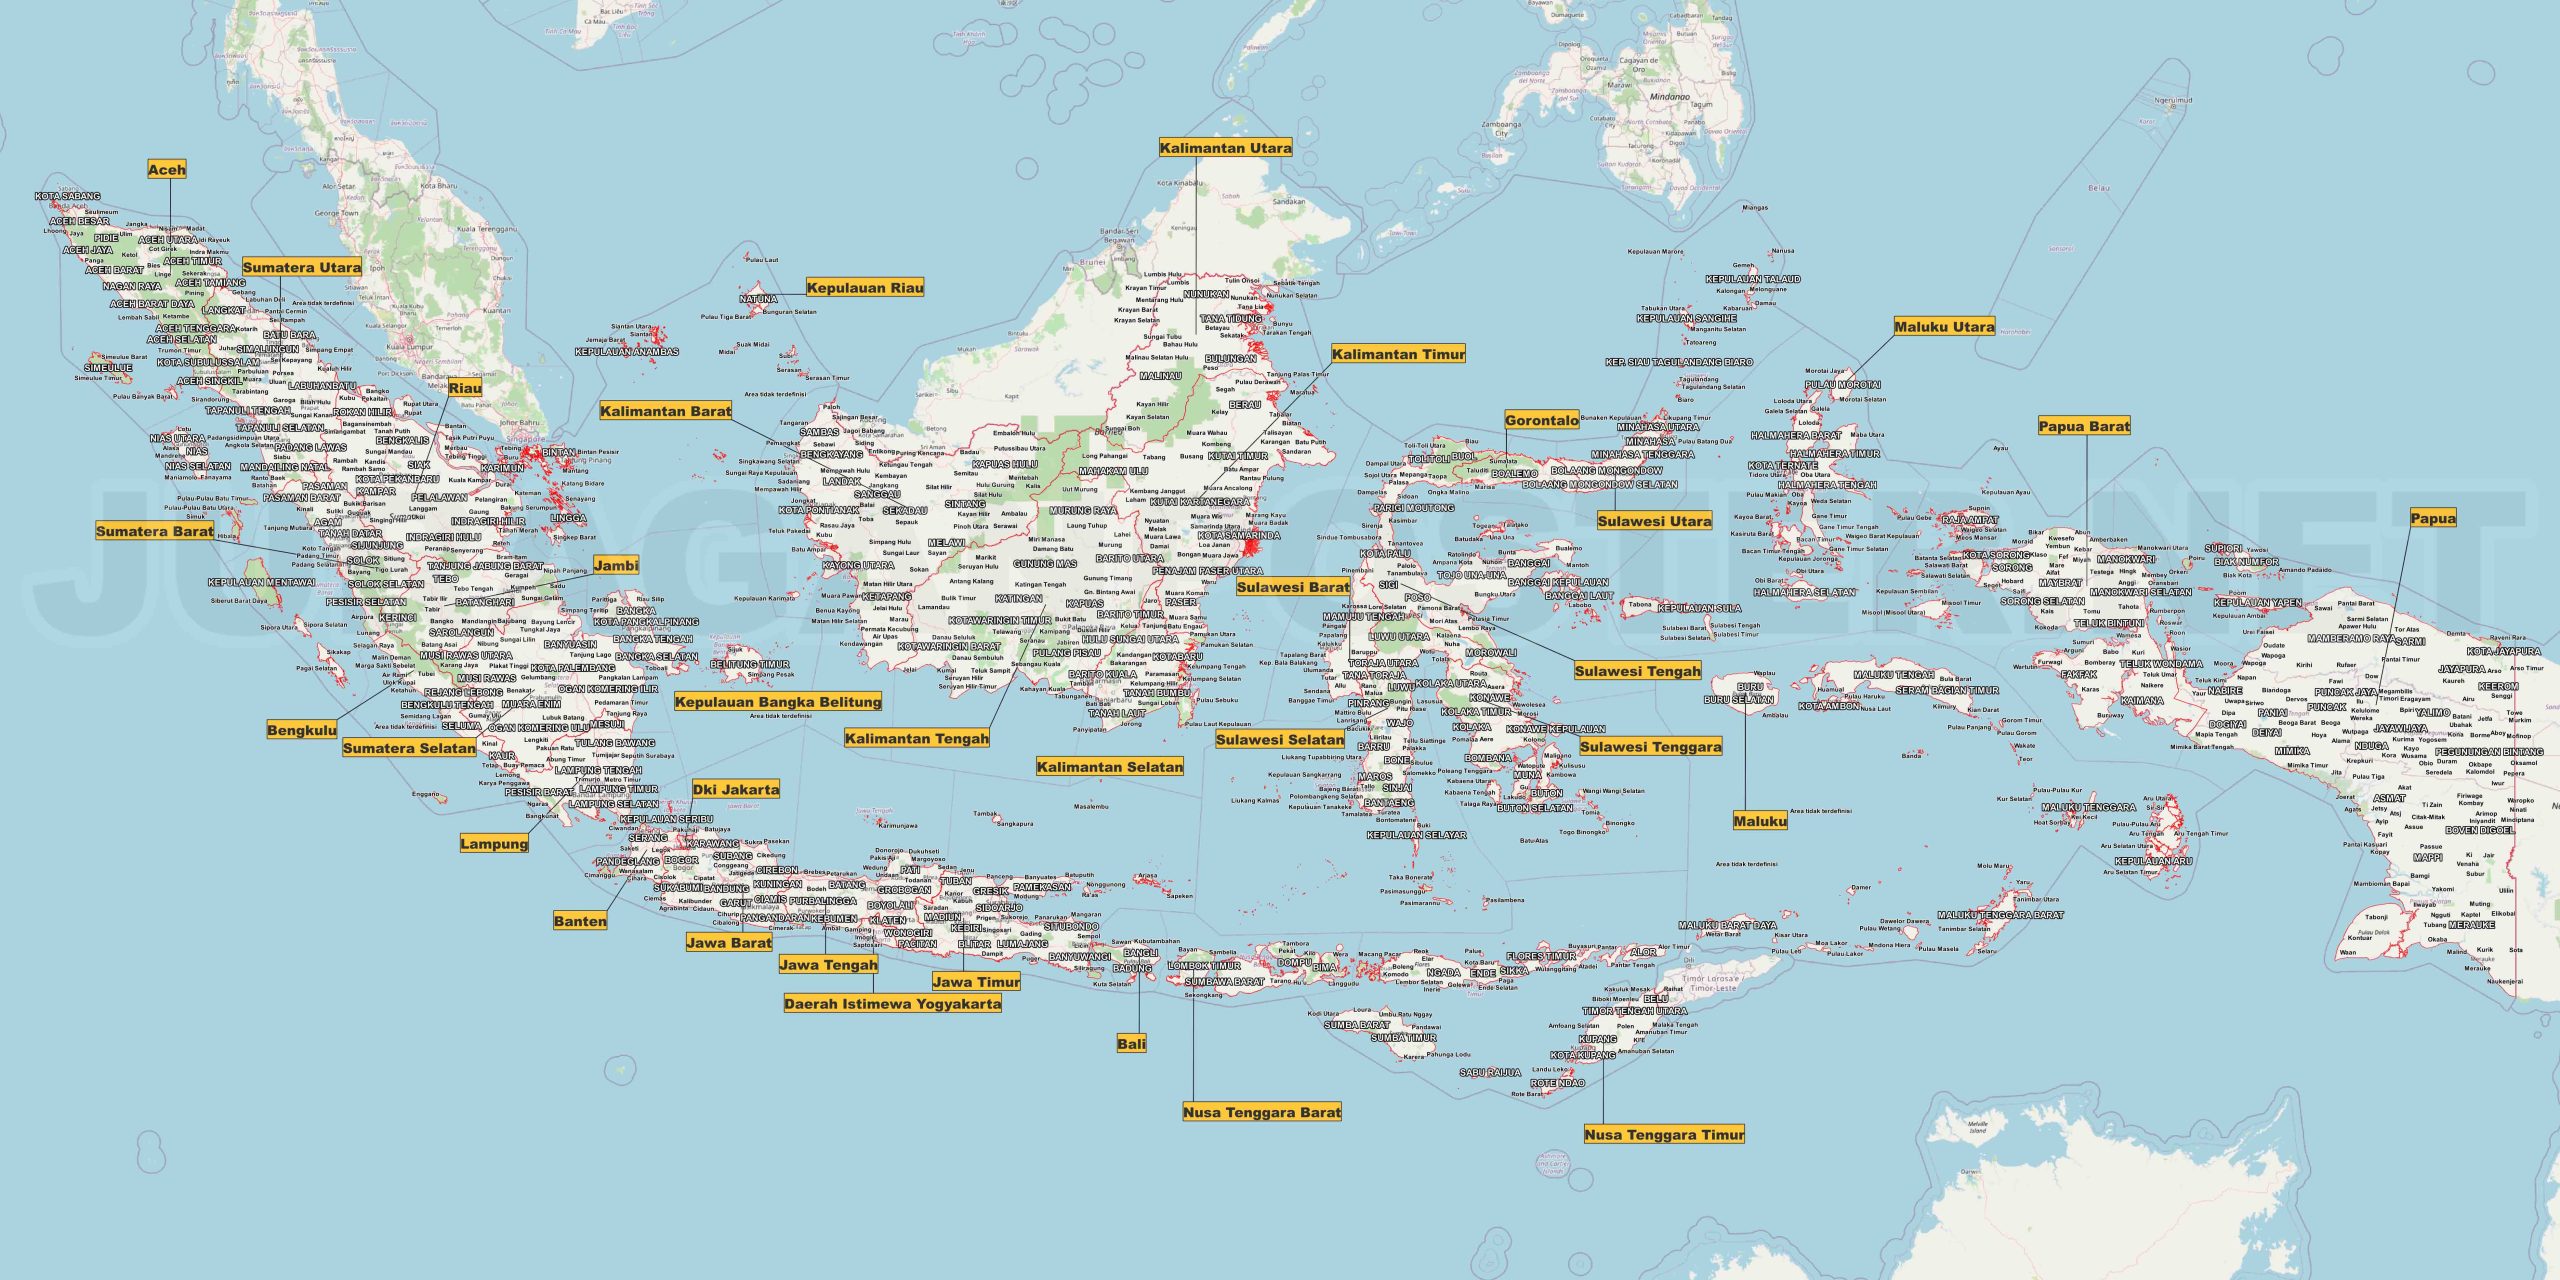 Gambar Peta Seluruh Indonesia: Melihat Nusantara dari Atas